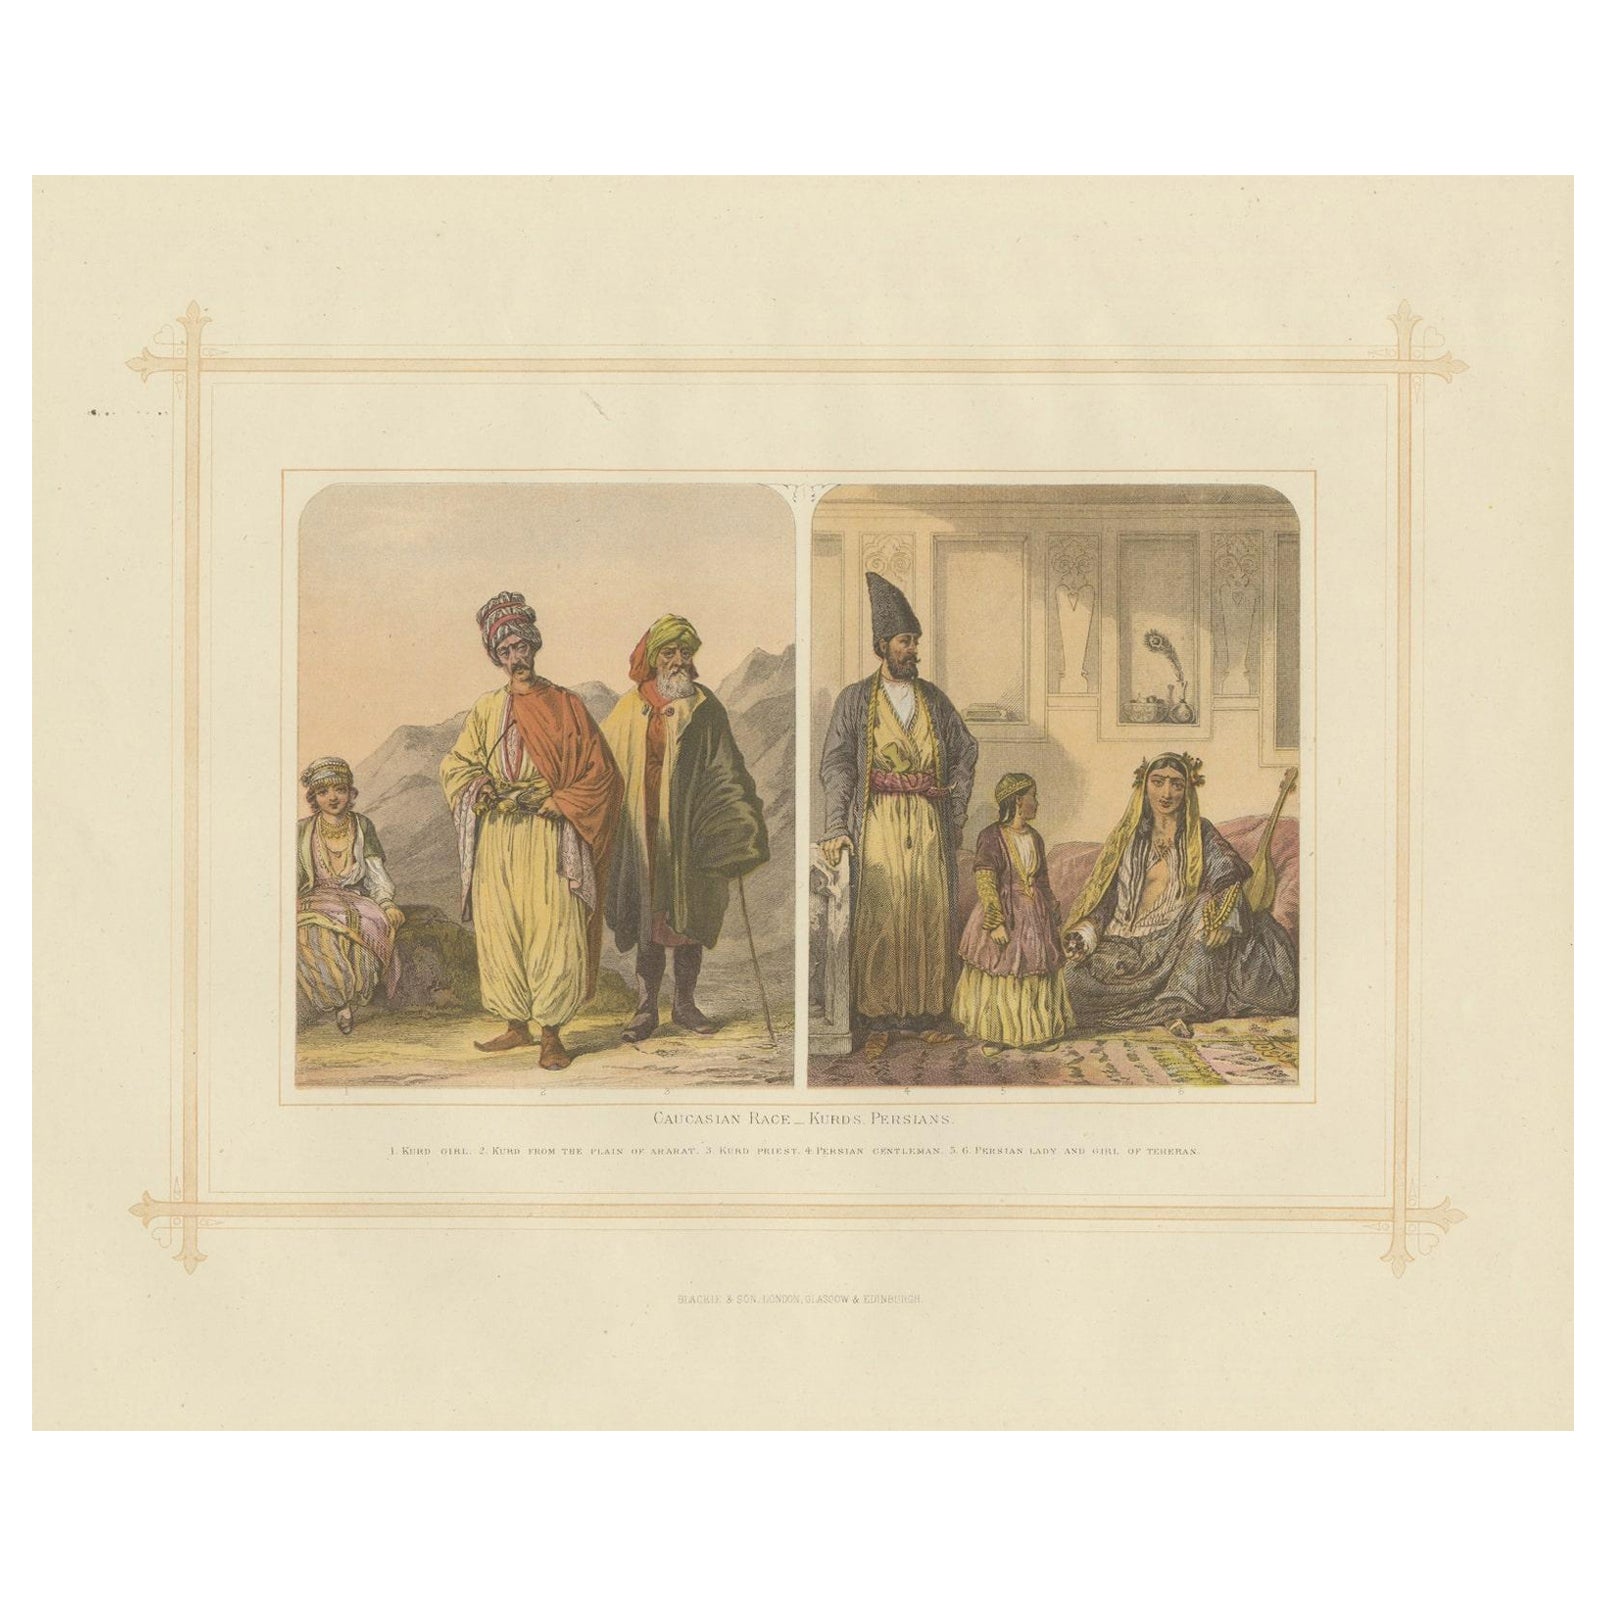 Antique Lithograph of the Caucasian Race - Kurds, Persians, 1882